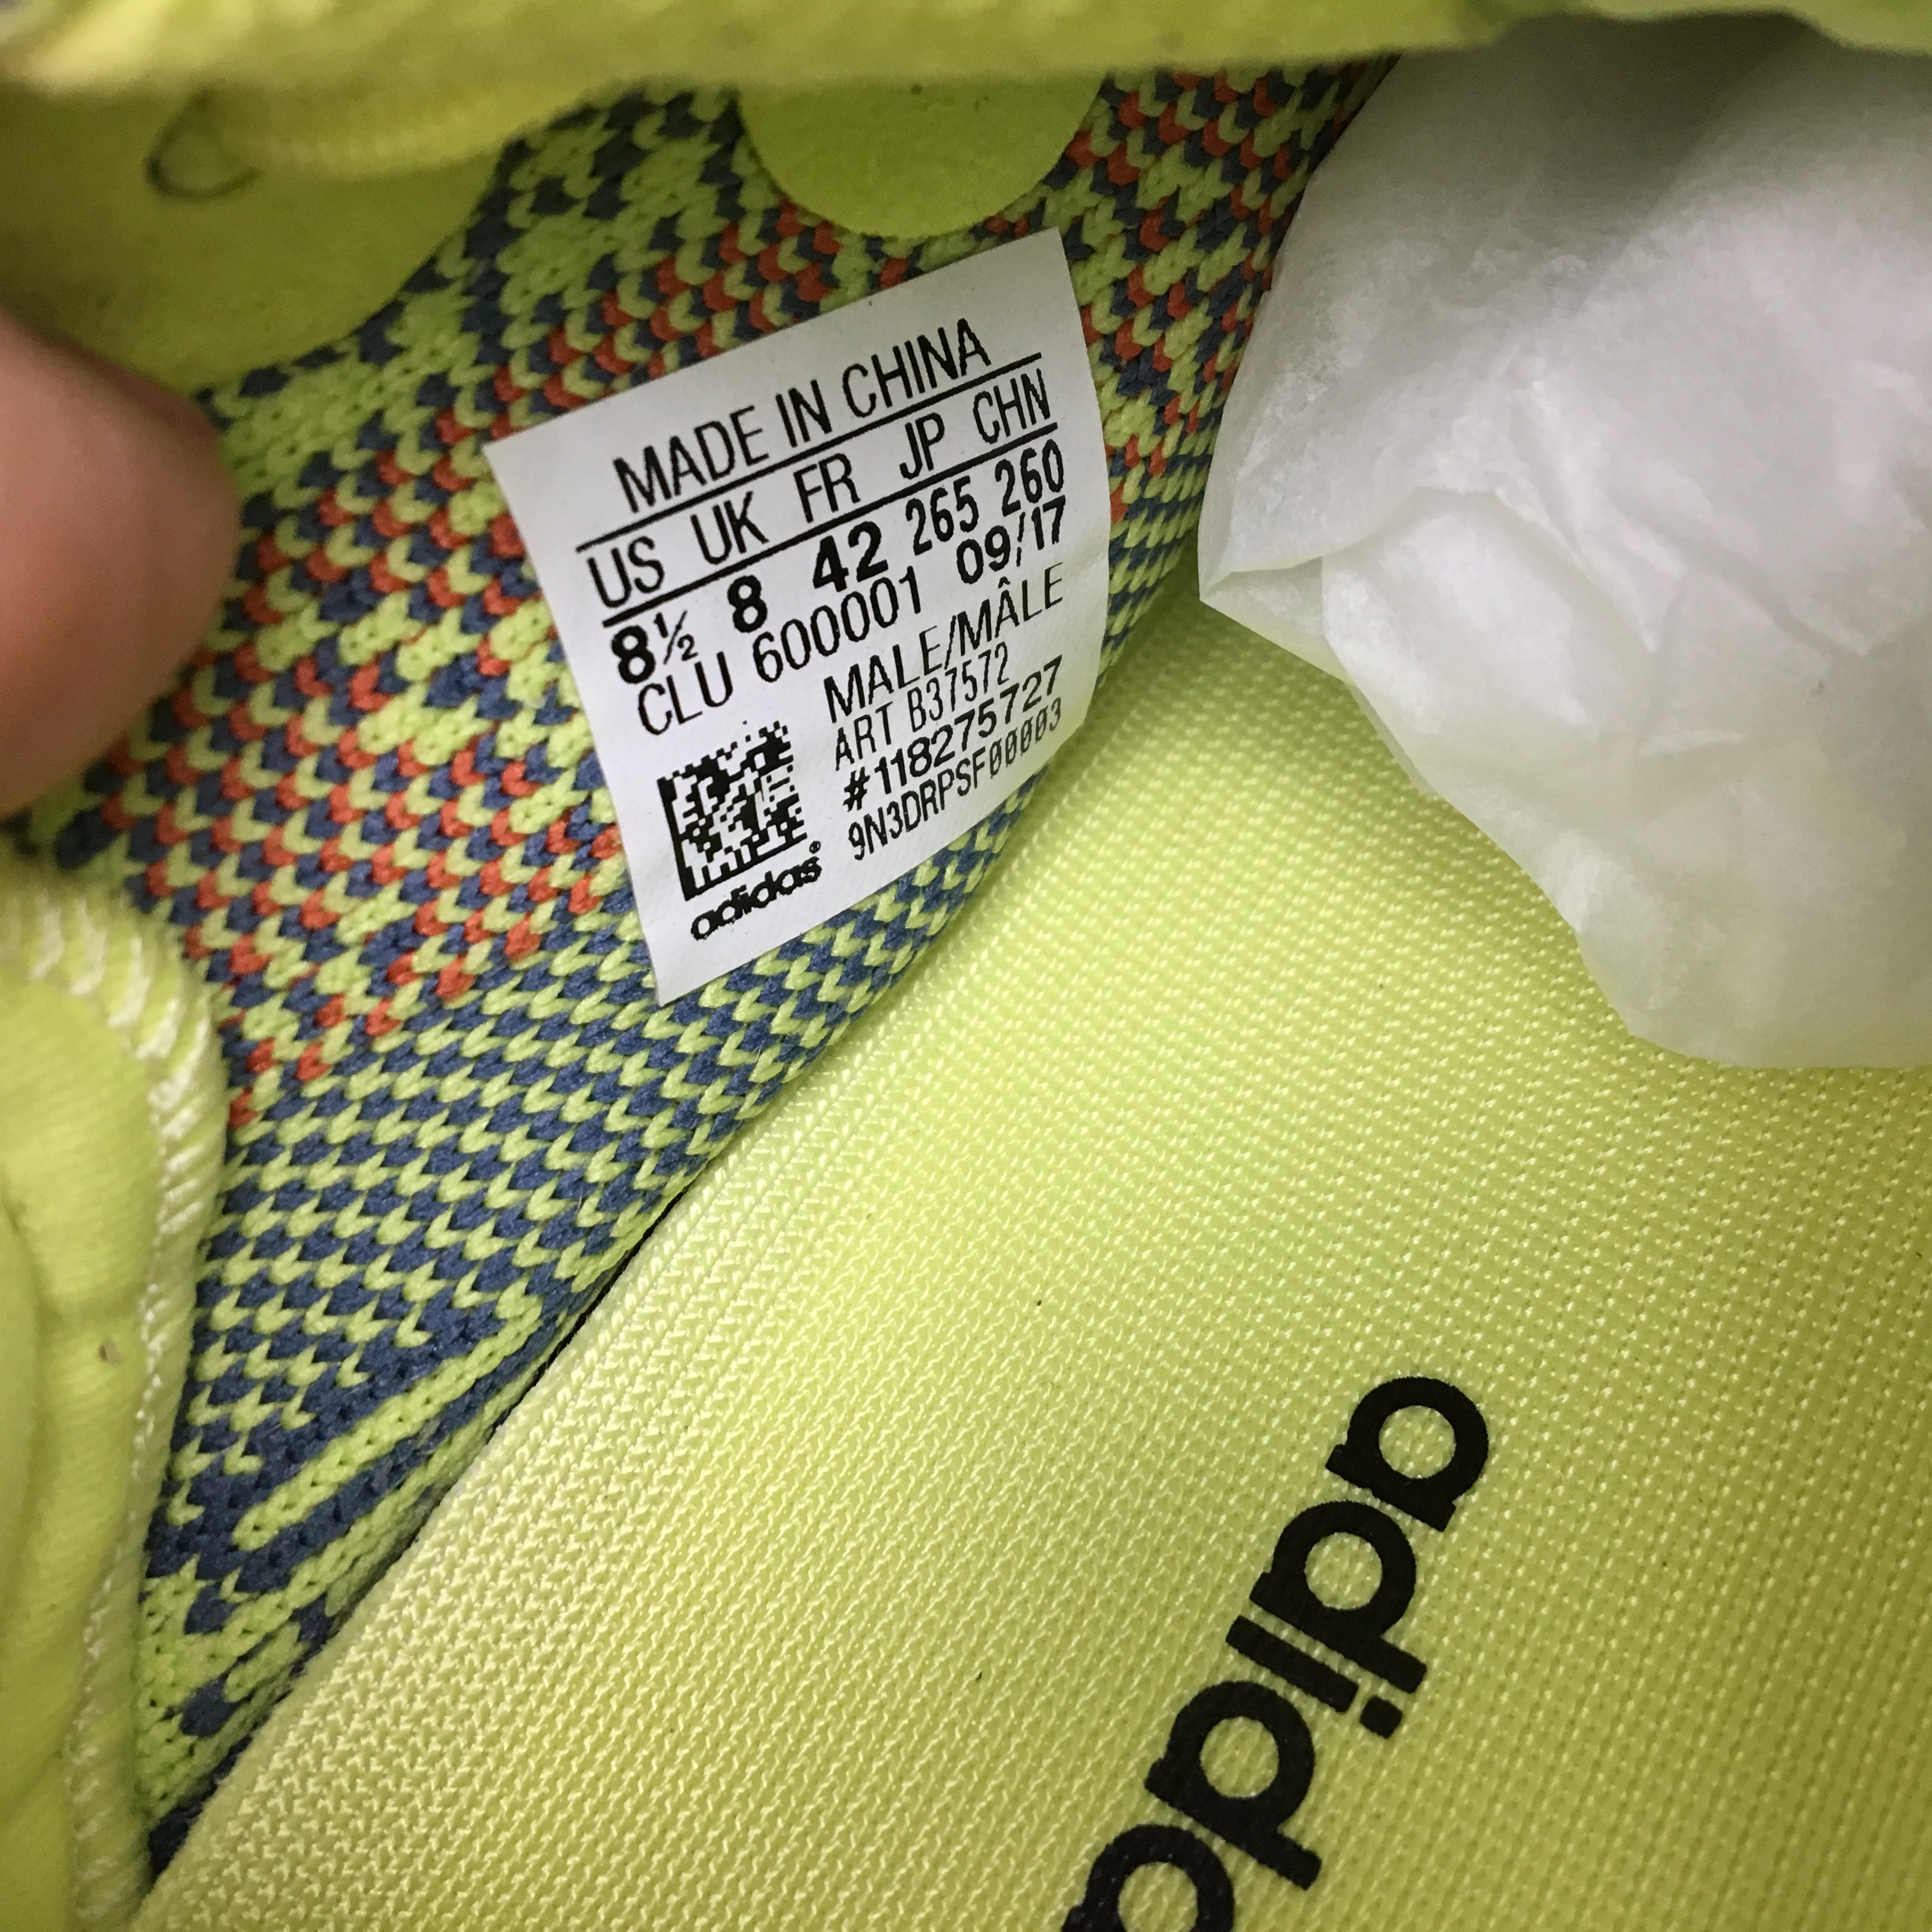 Adidas Originals Yeezy Boost 350 V2 Yebra B37572 14